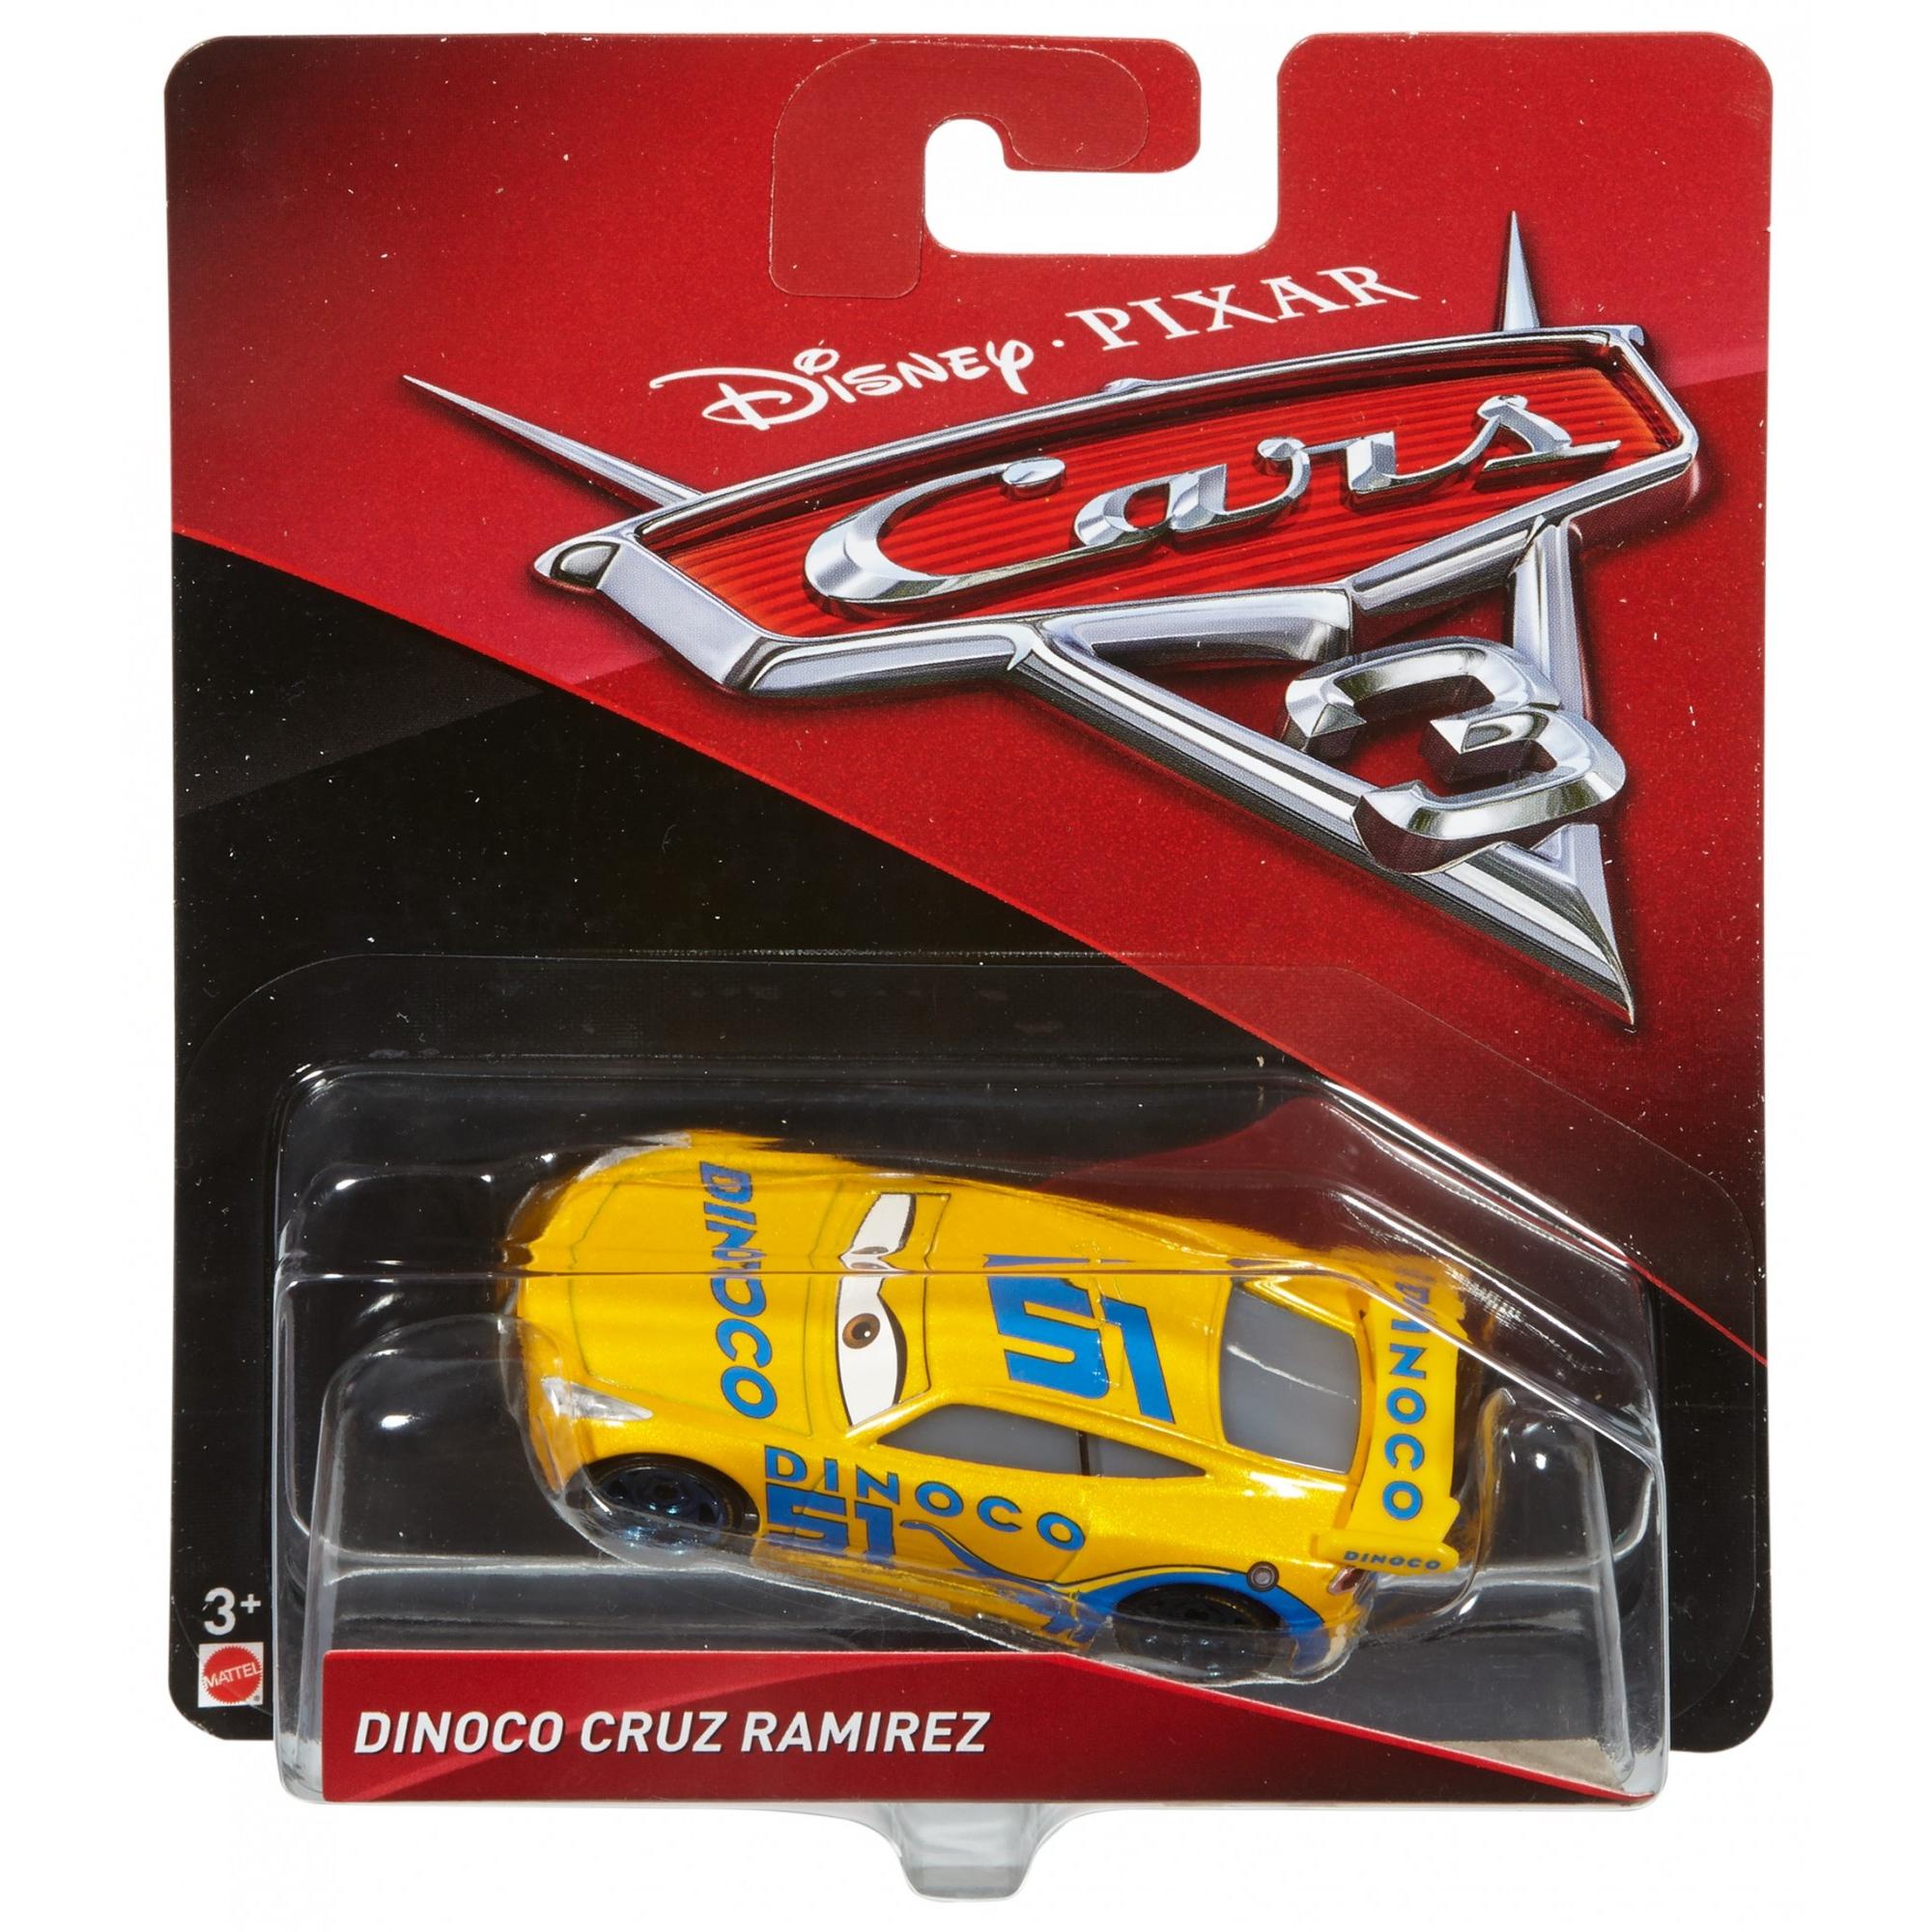 Disney/Pixar Cars 3 Dinoco Cruz Ramirez Die-Cast Vehicle - image 4 of 5